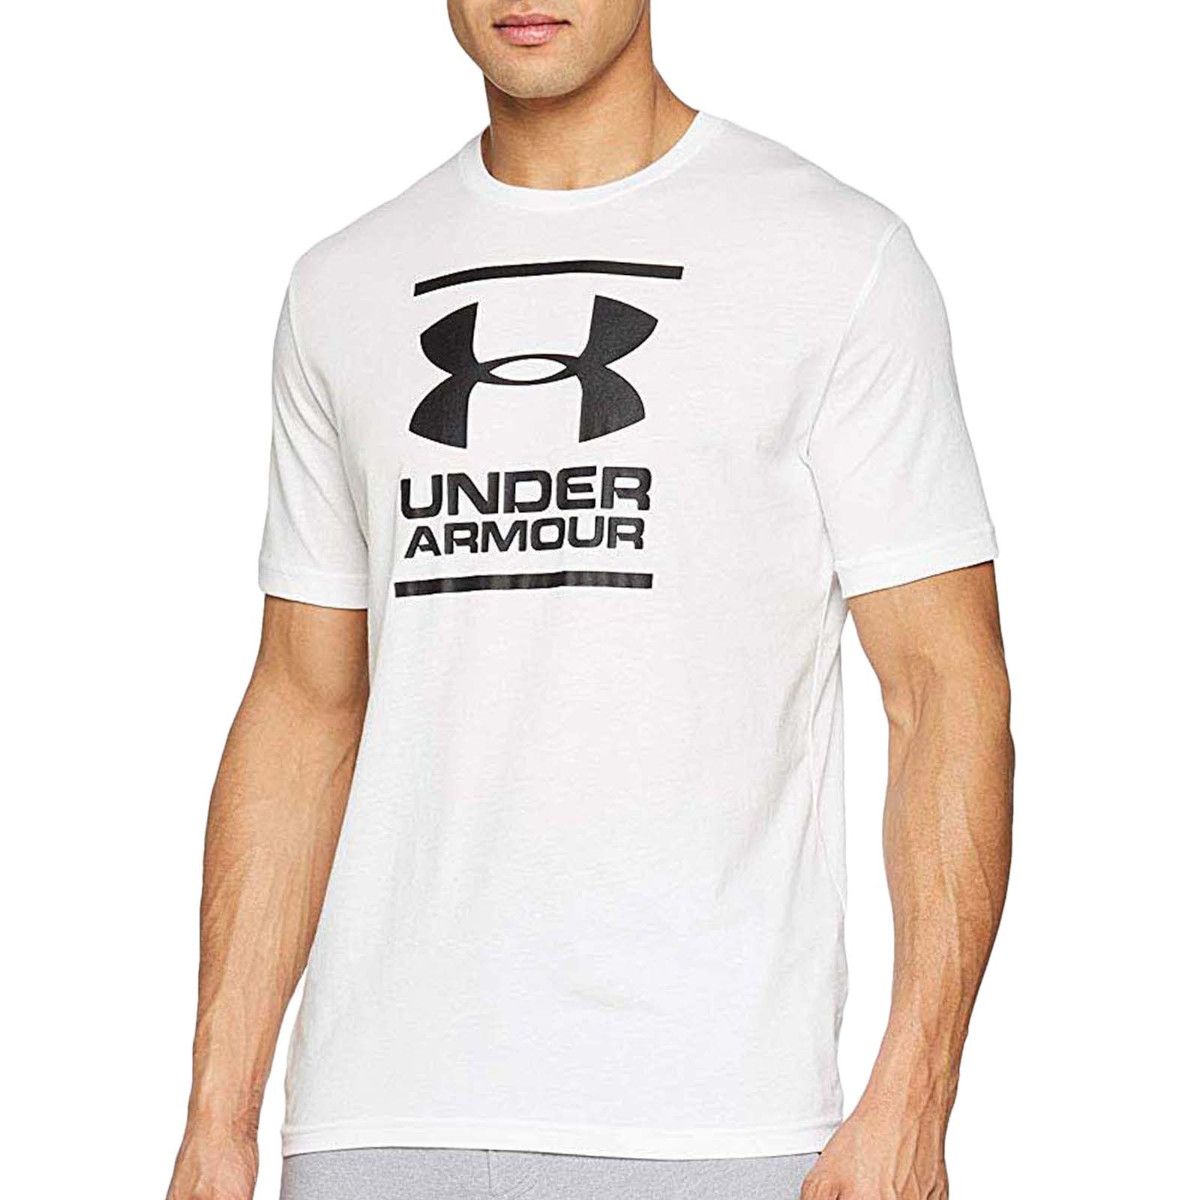 Under Armour GL Foundation Men's T-Shirt 1326849-100